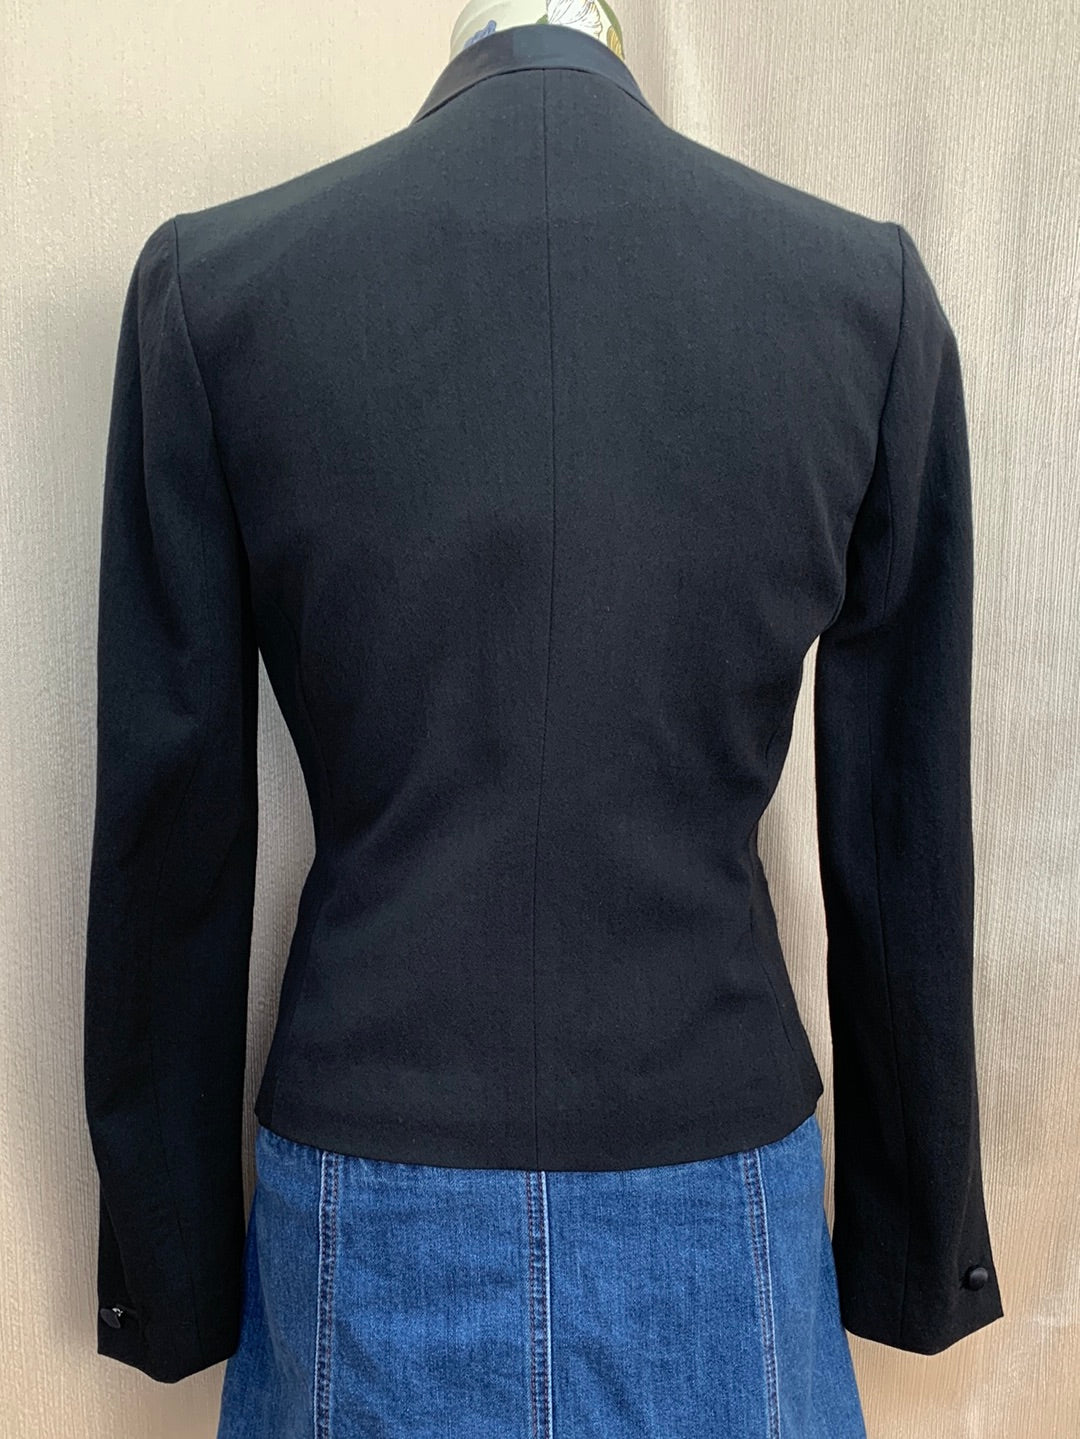 NWT - TORY BURCH black Wool Built-in Vest Tuxedo Olivier Blazer - 2